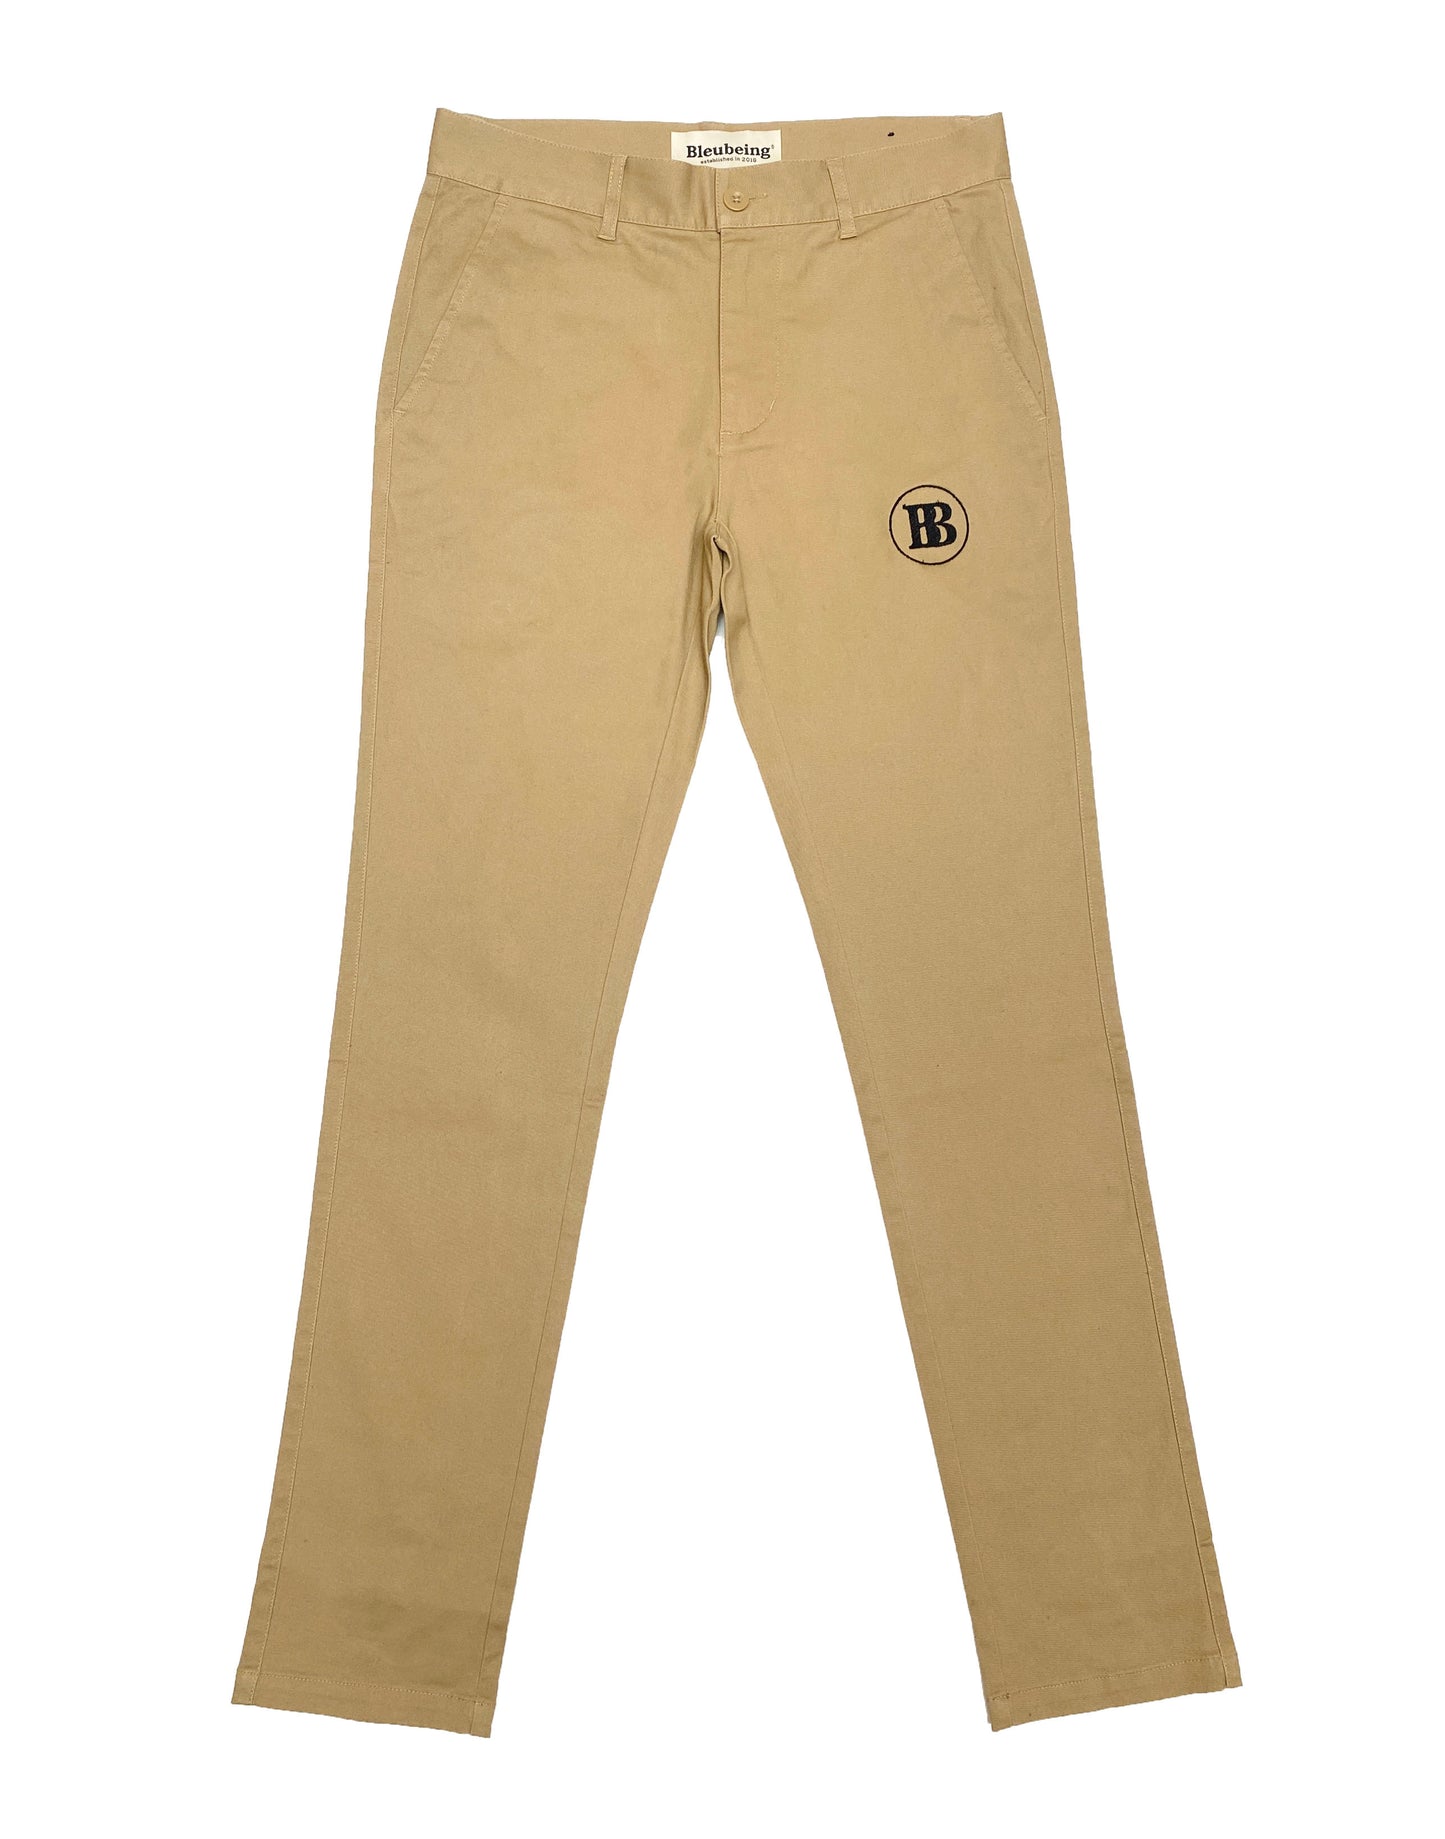 "BB" Khaki Pants